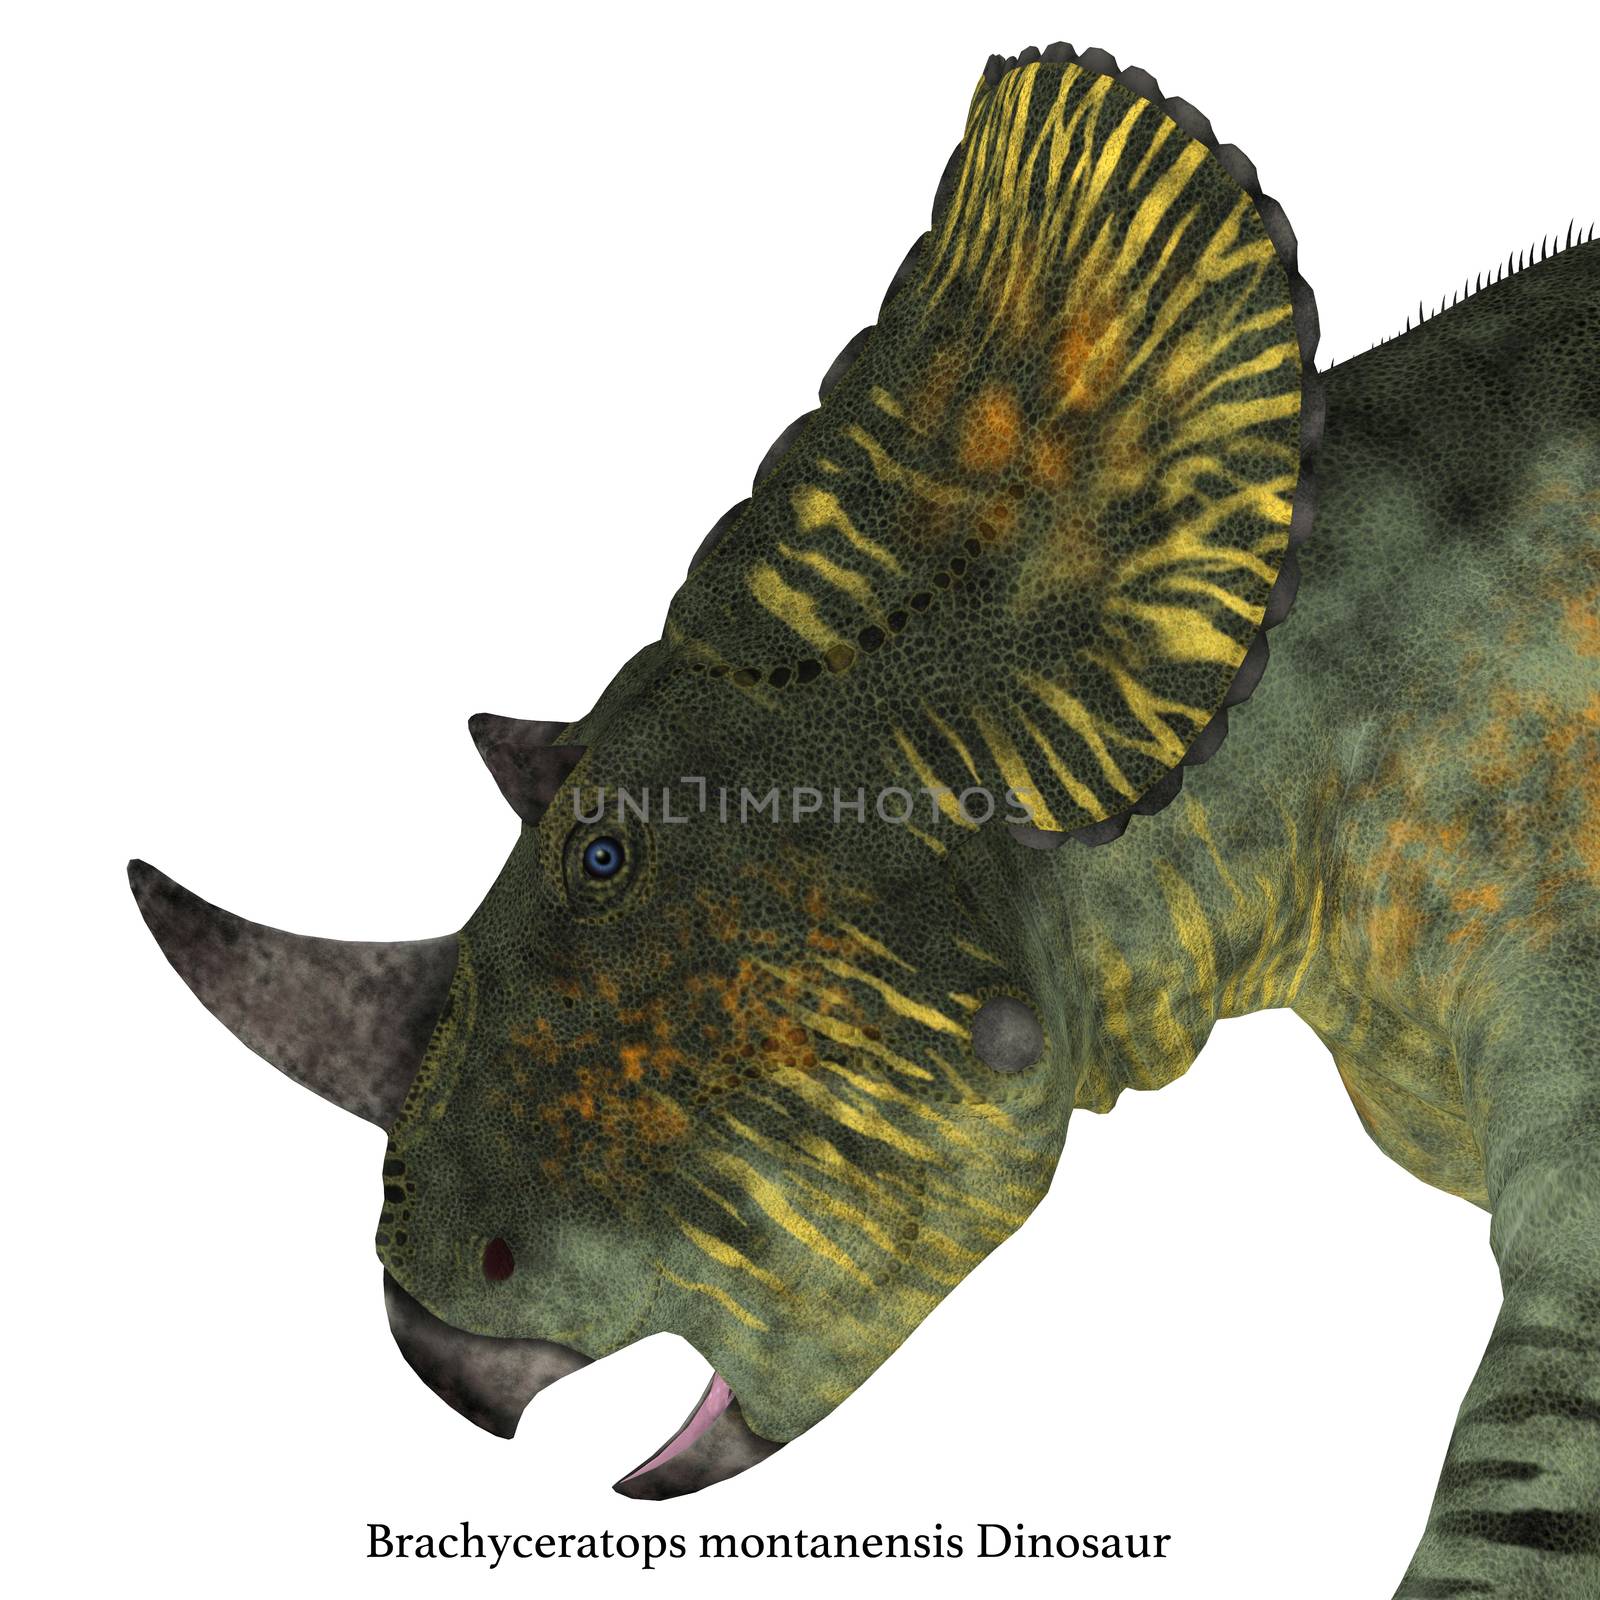 Brachyceratops Dinosaur Head by Catmando